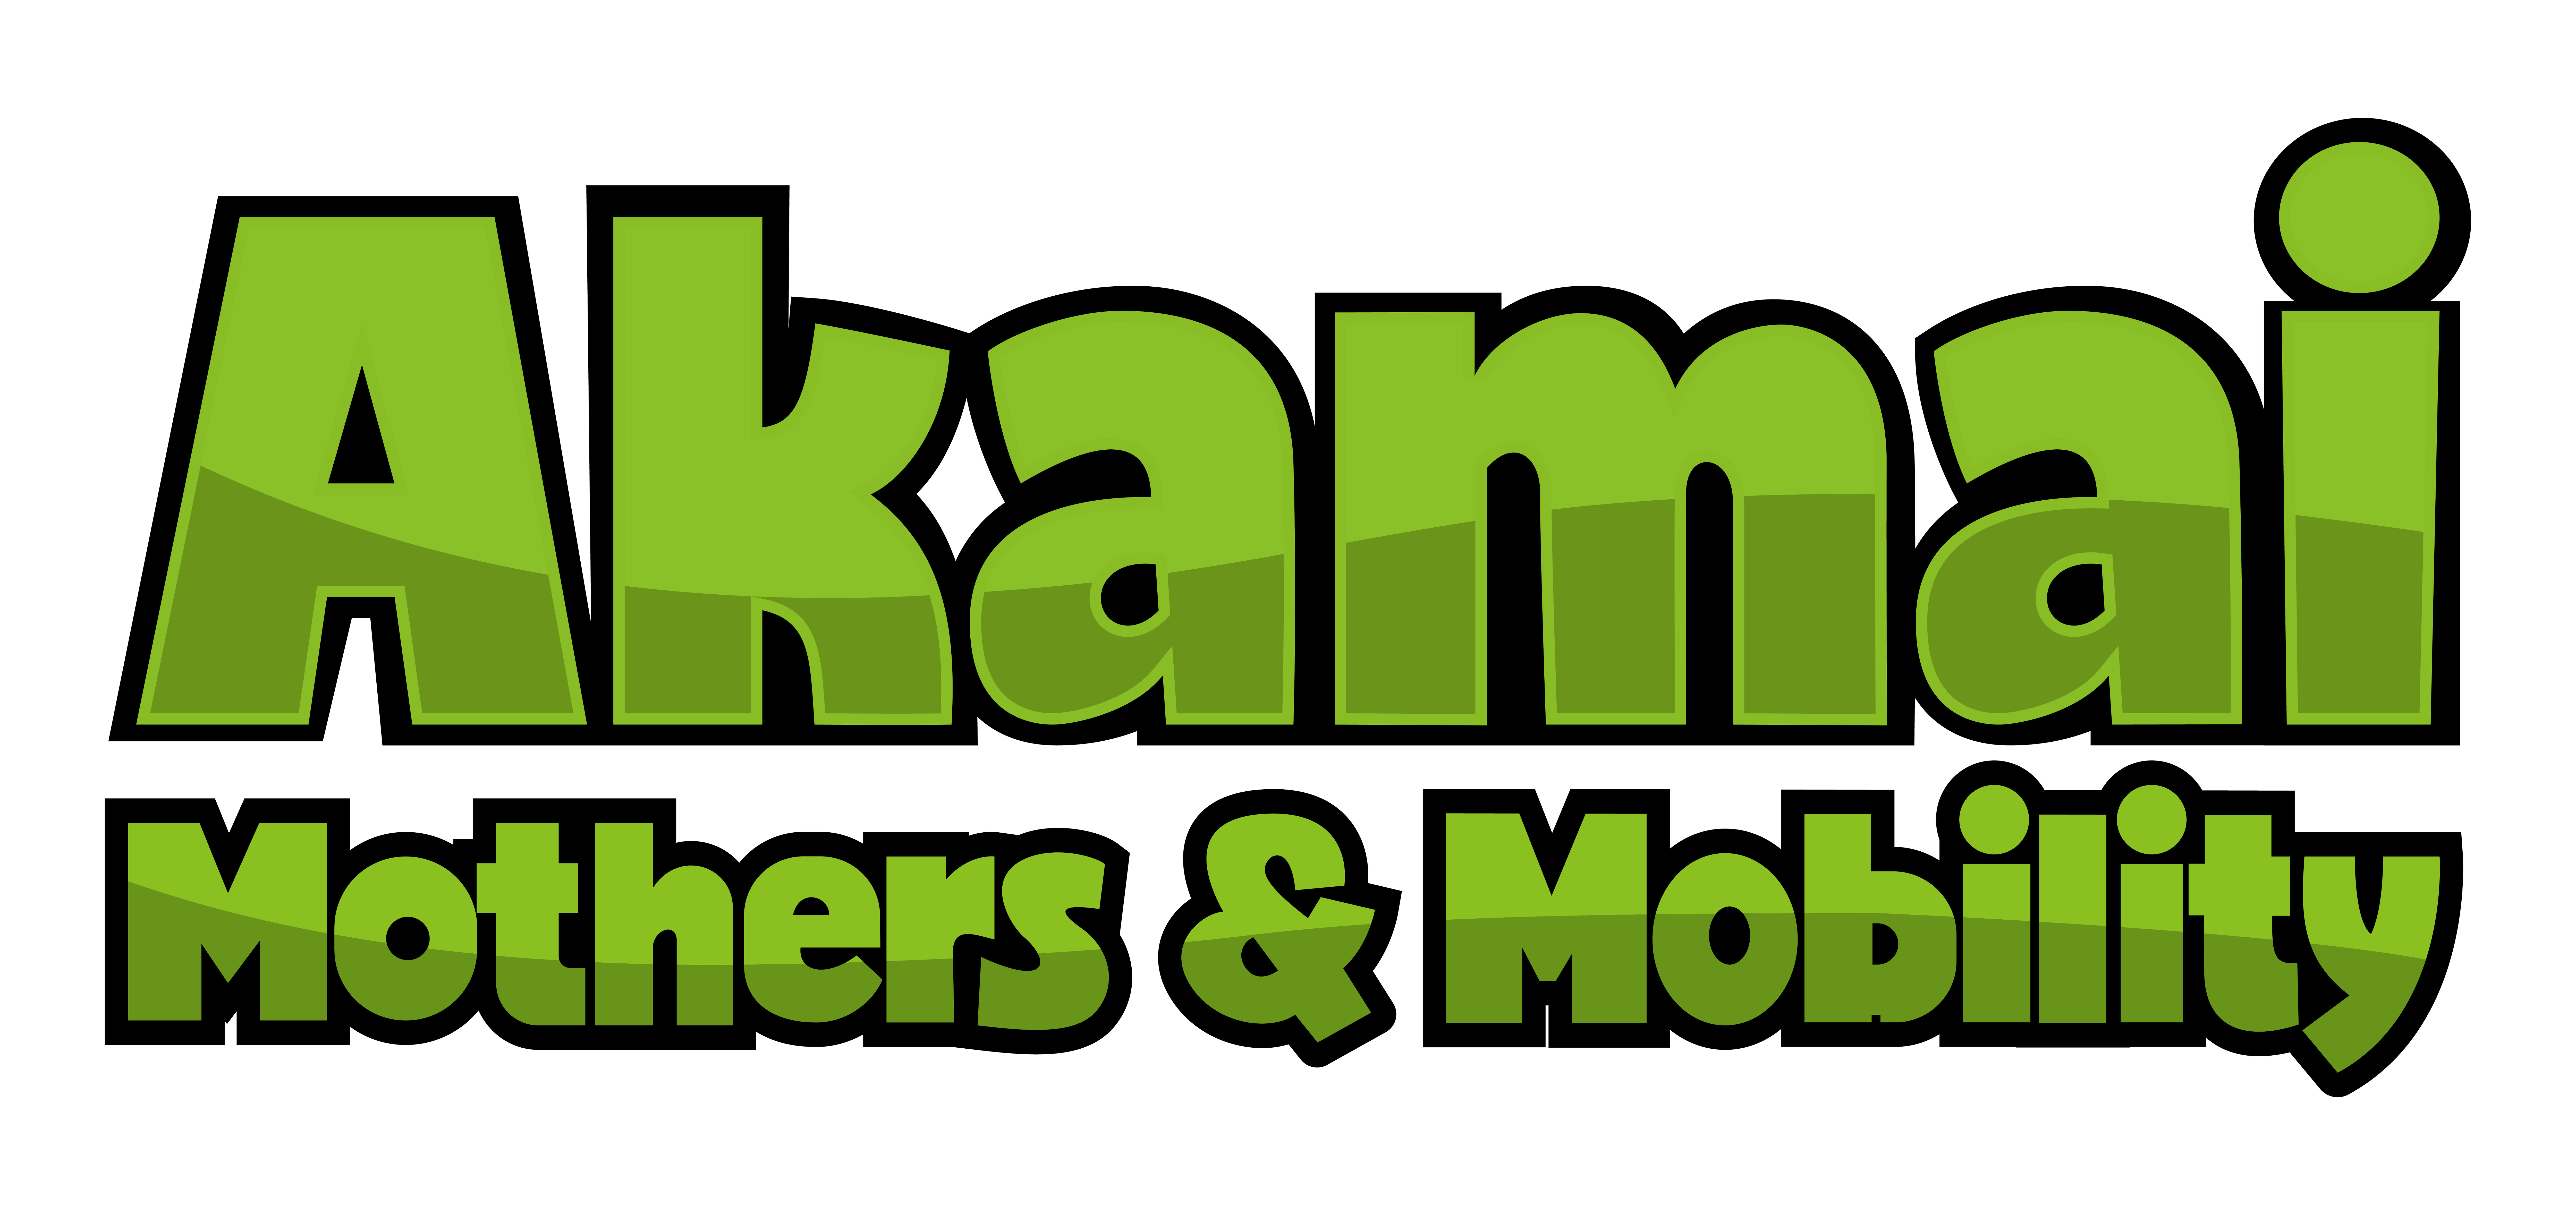 Akamai Mothers & Mobility